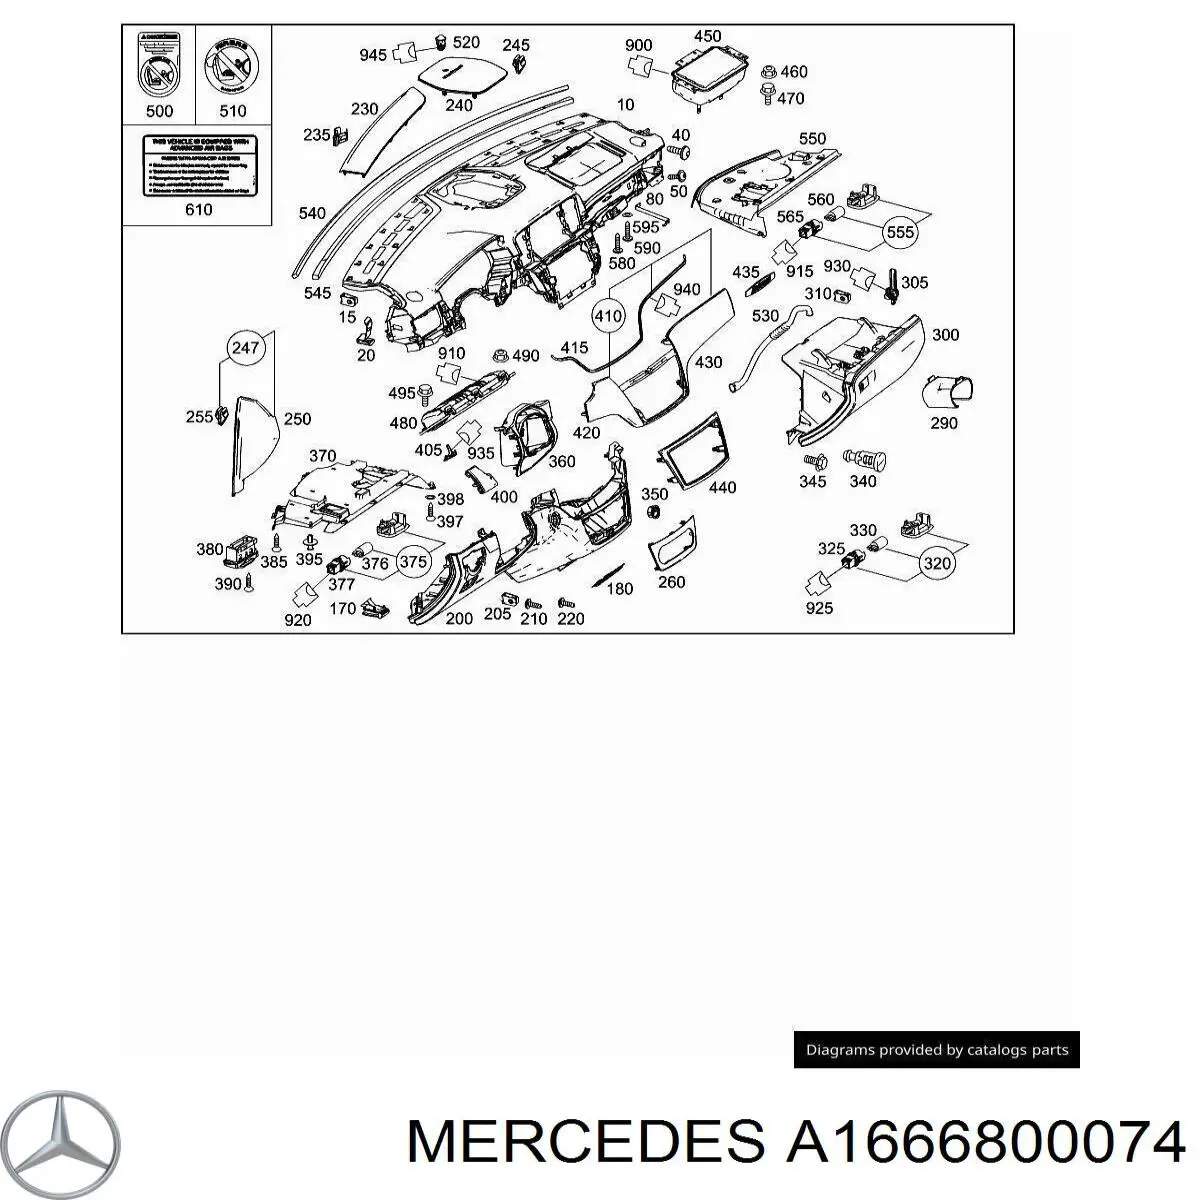 A1666800074 Mercedes